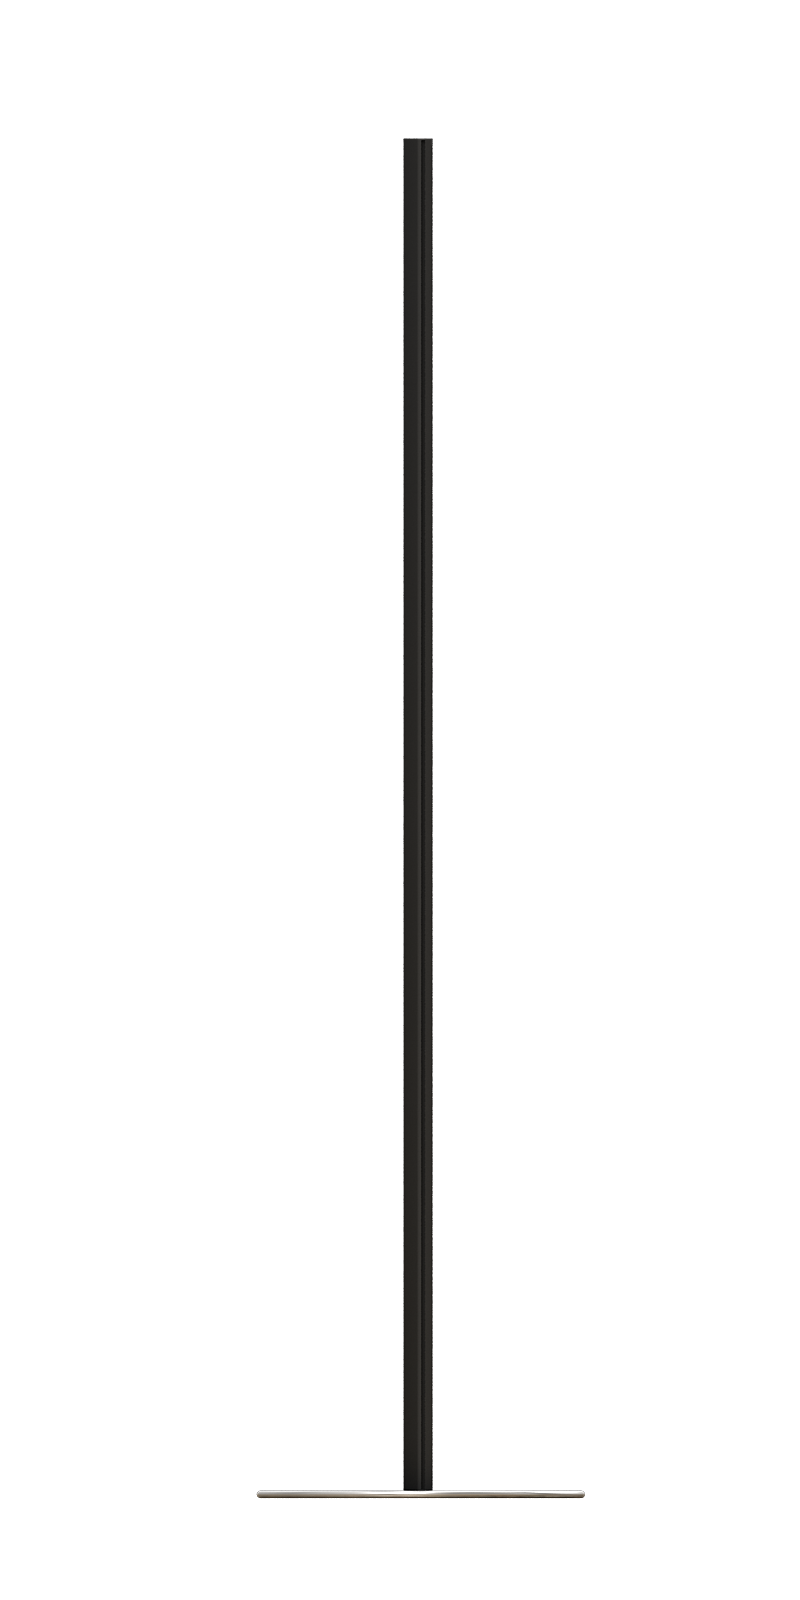 DEMO SWEDX Blade 116 cm (46 Zoll) - schwarz